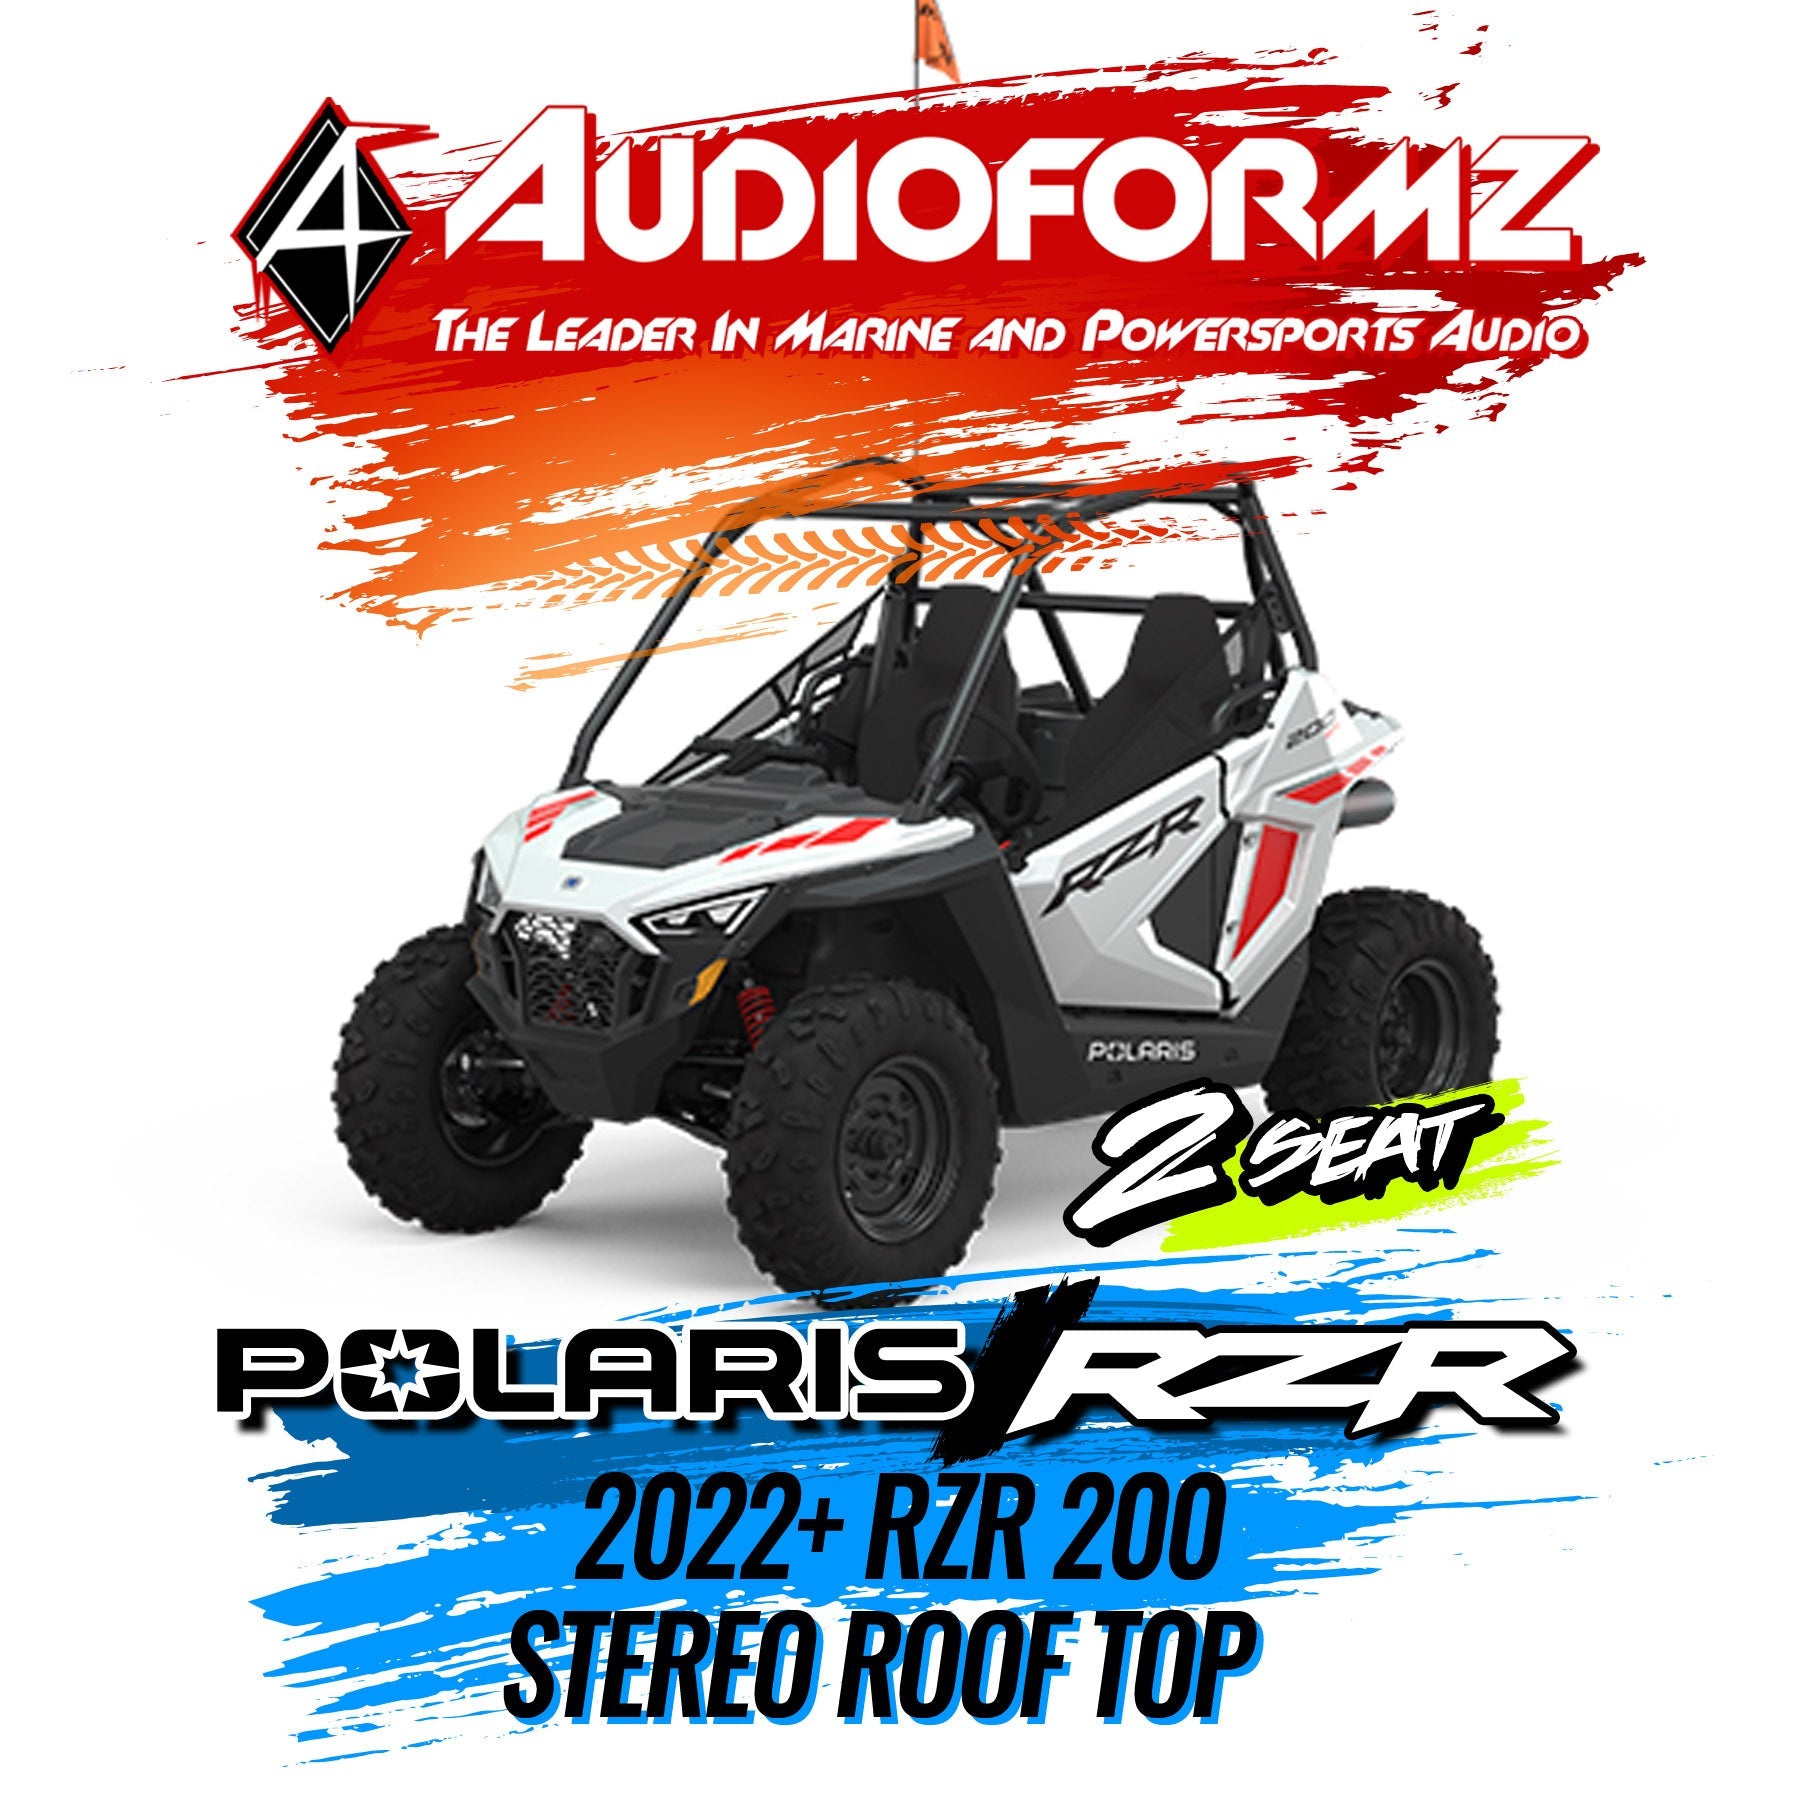 2022 Polaris Rzr 200 Stereo Tops 2